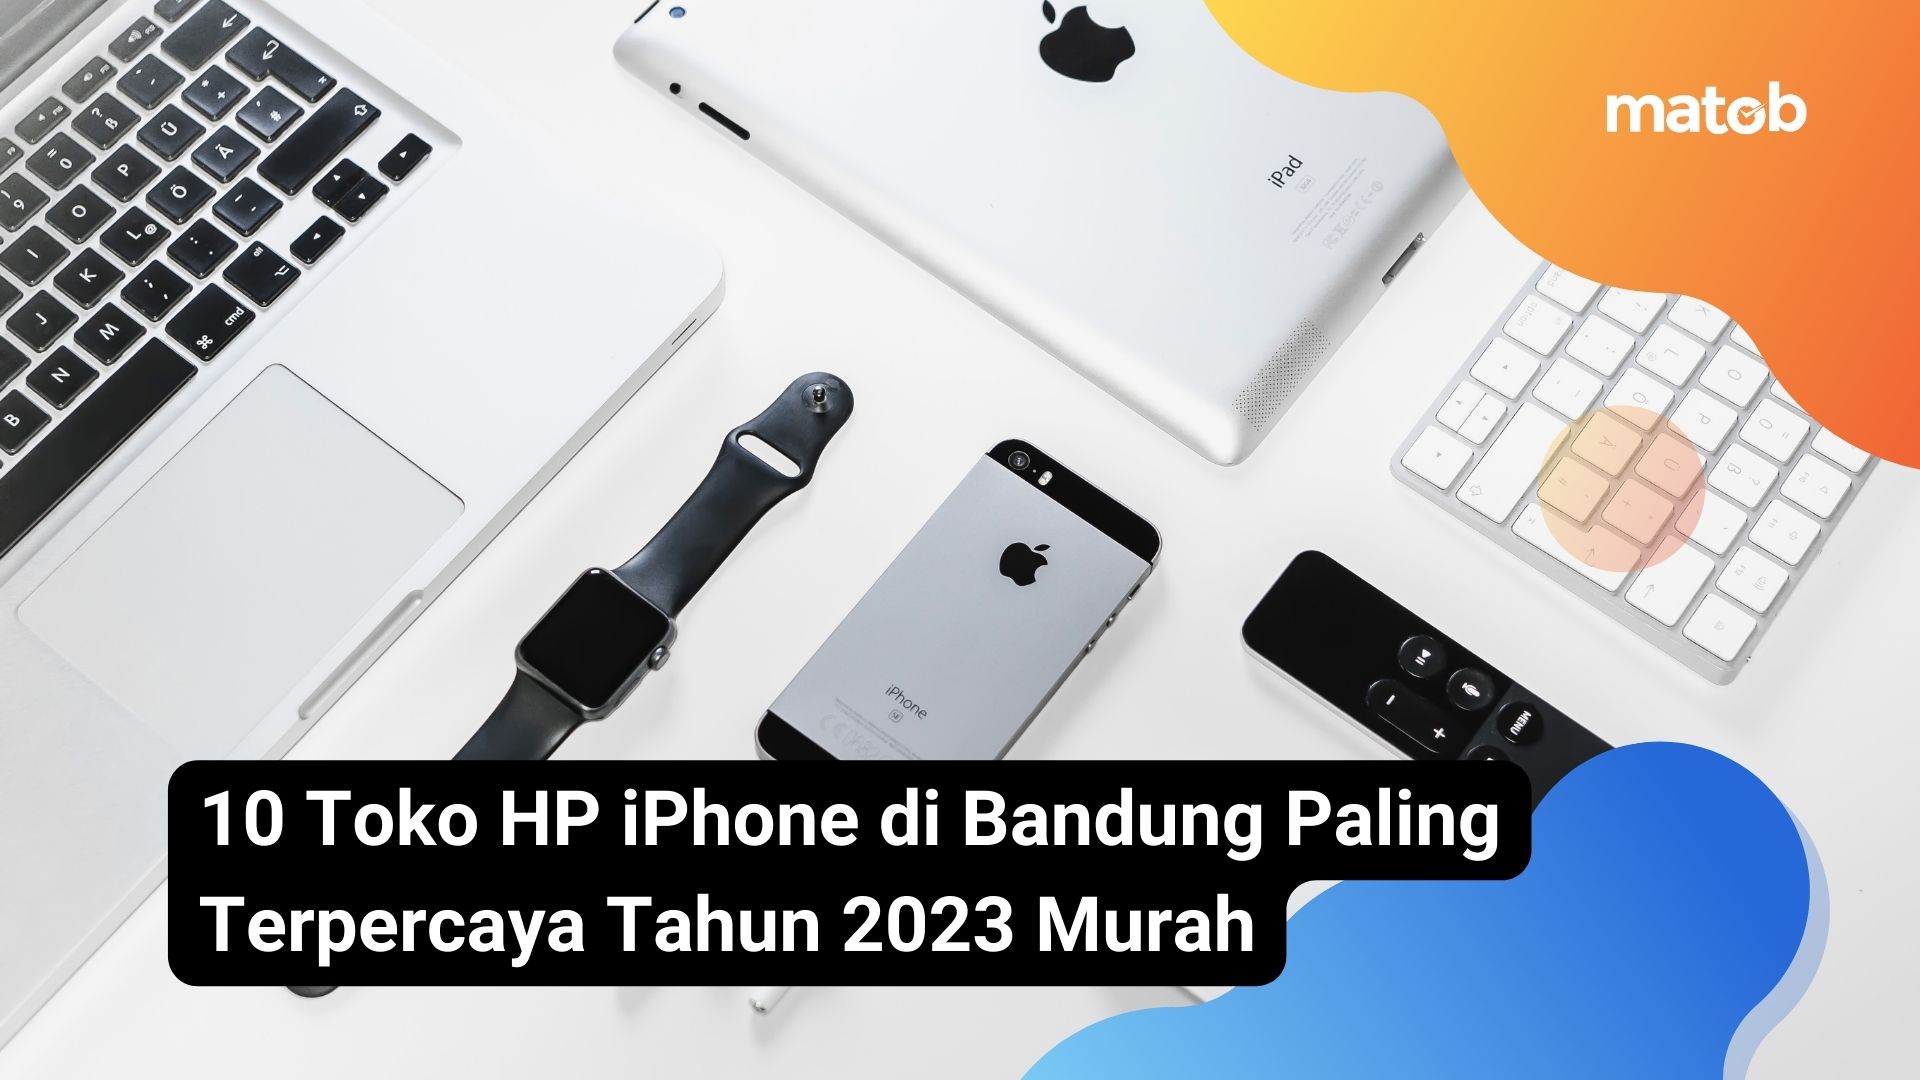 10 Toko HP iPhone di Bandung Paling Terpercaya Tahun 2023 Murah